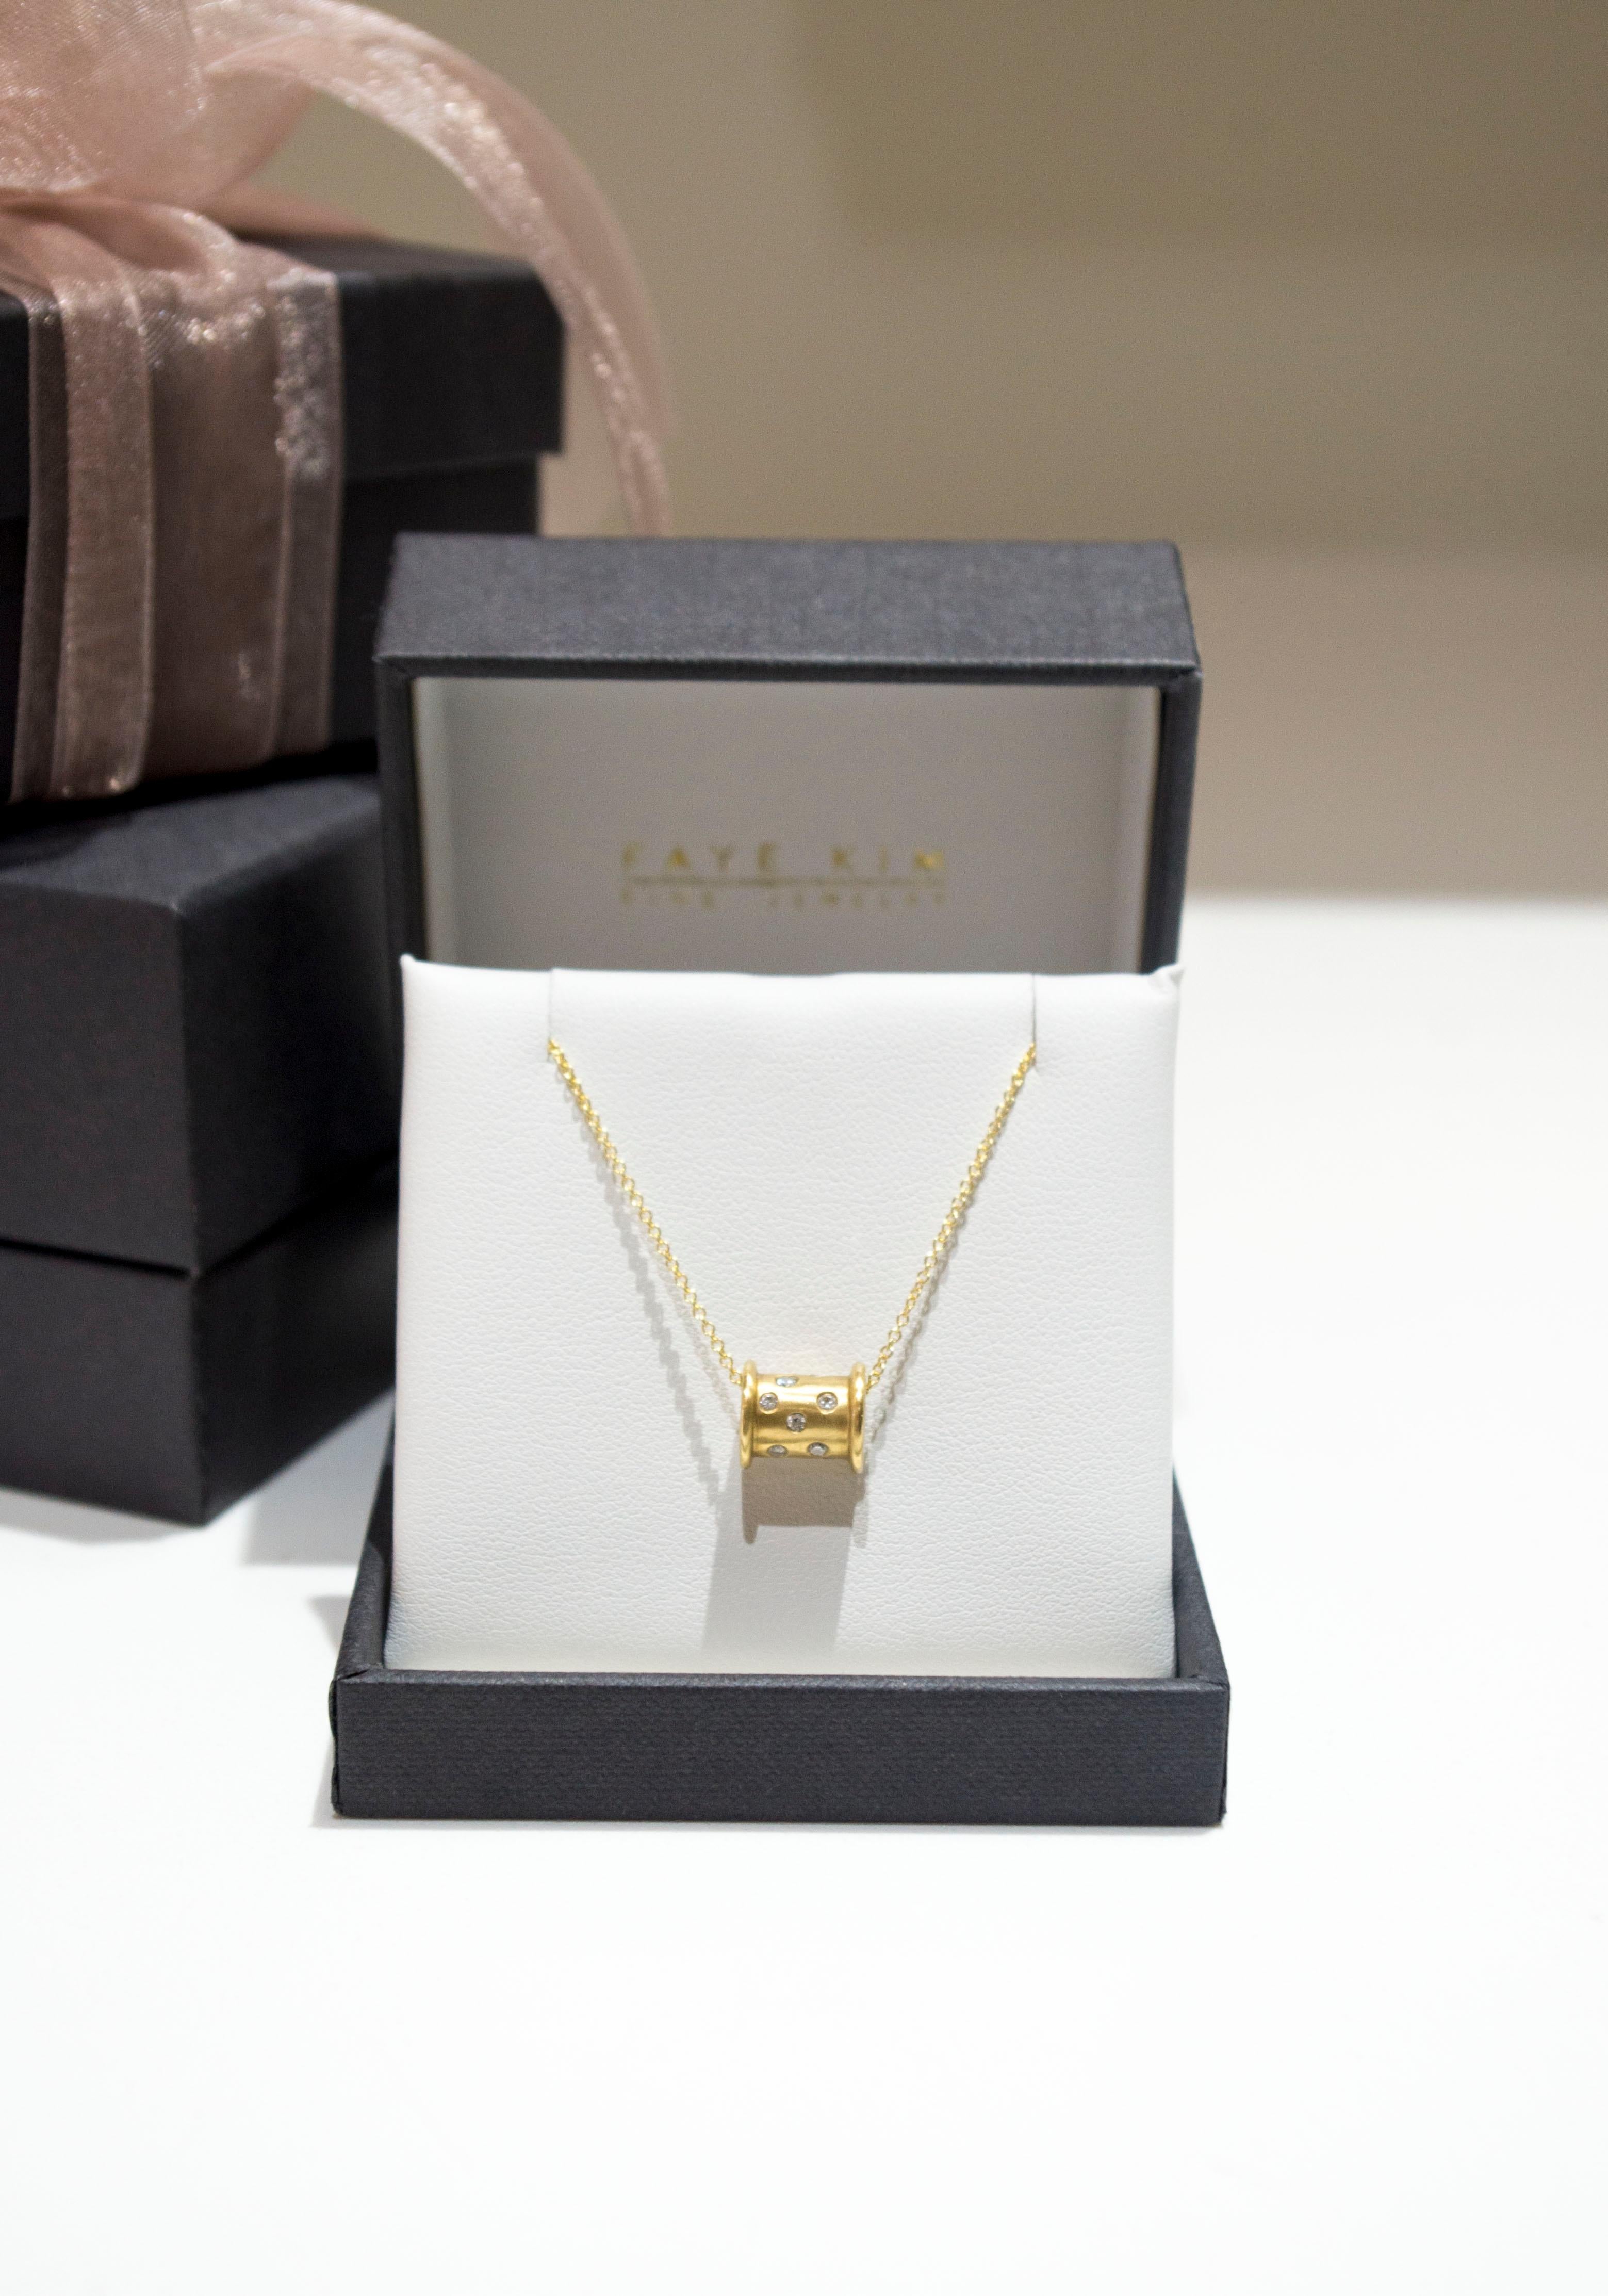 Women's Faye Kim 18 Karat Gold Diamond Spool Necklace For Sale